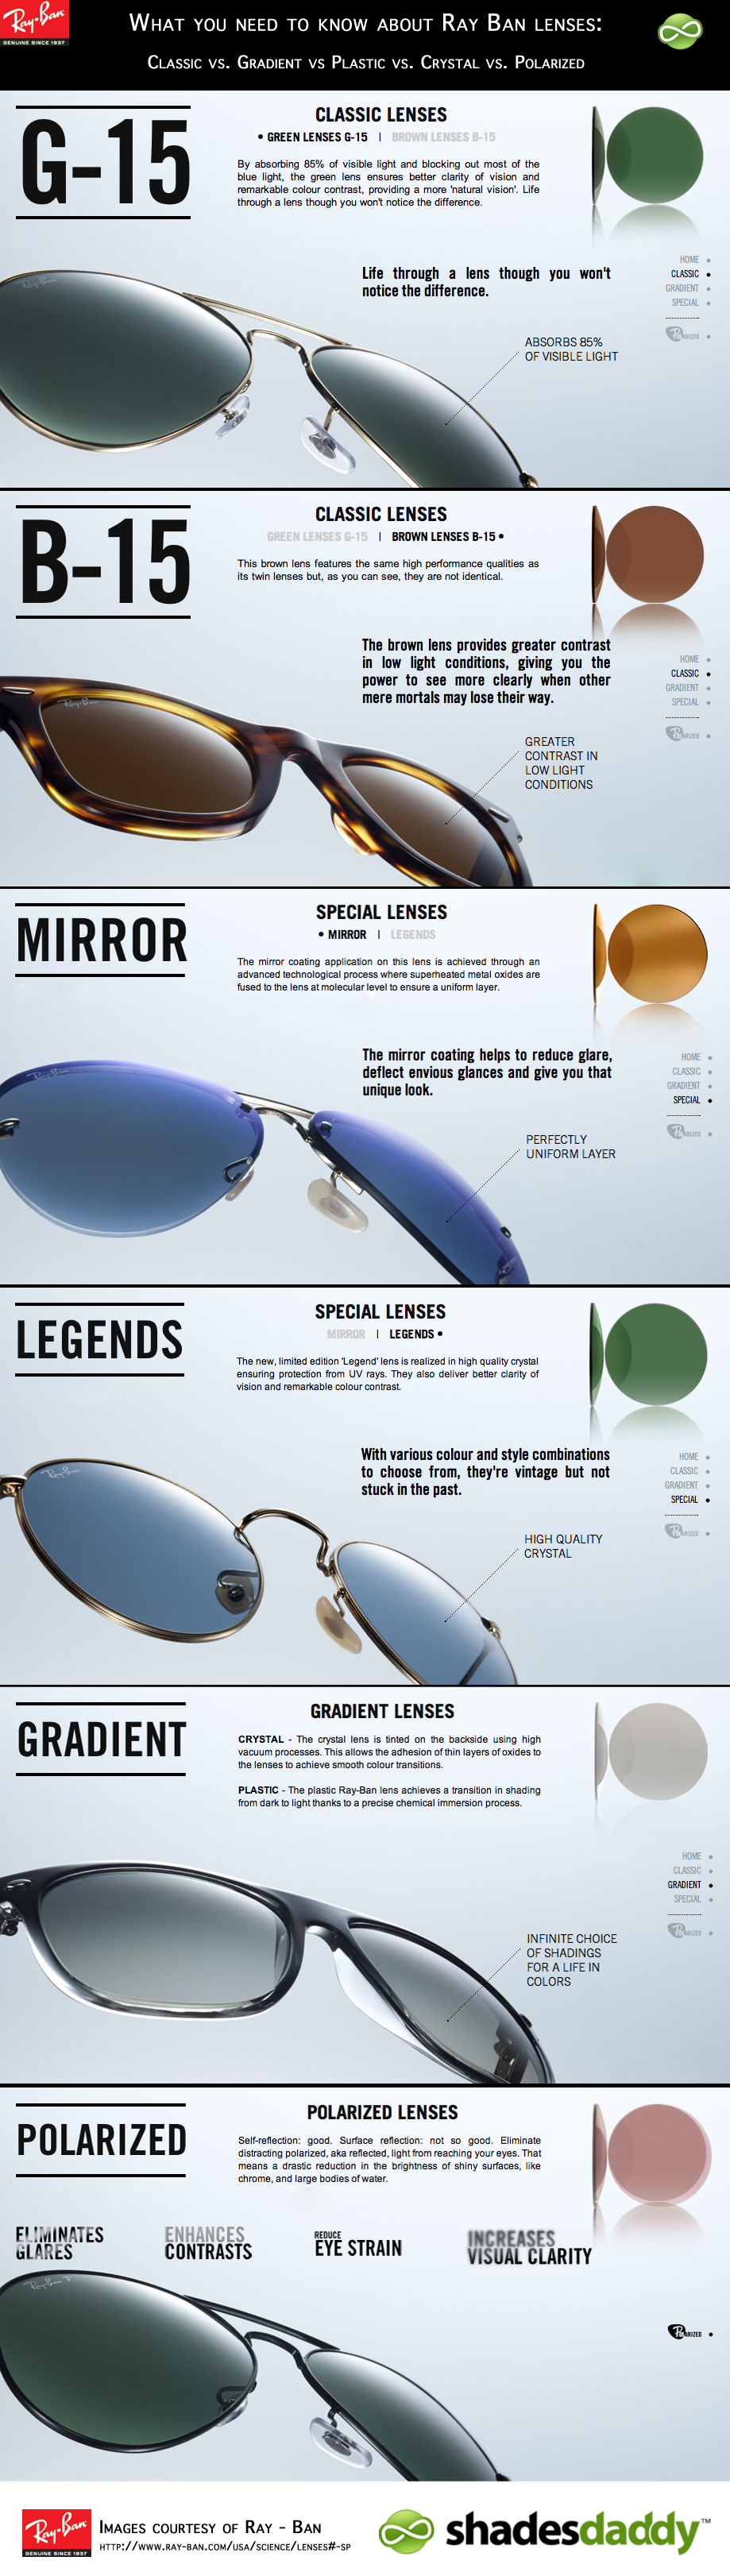 RayBan_Lenses_Sunglasses_Shadesdaddy - Sunglasses and Style Blog ...